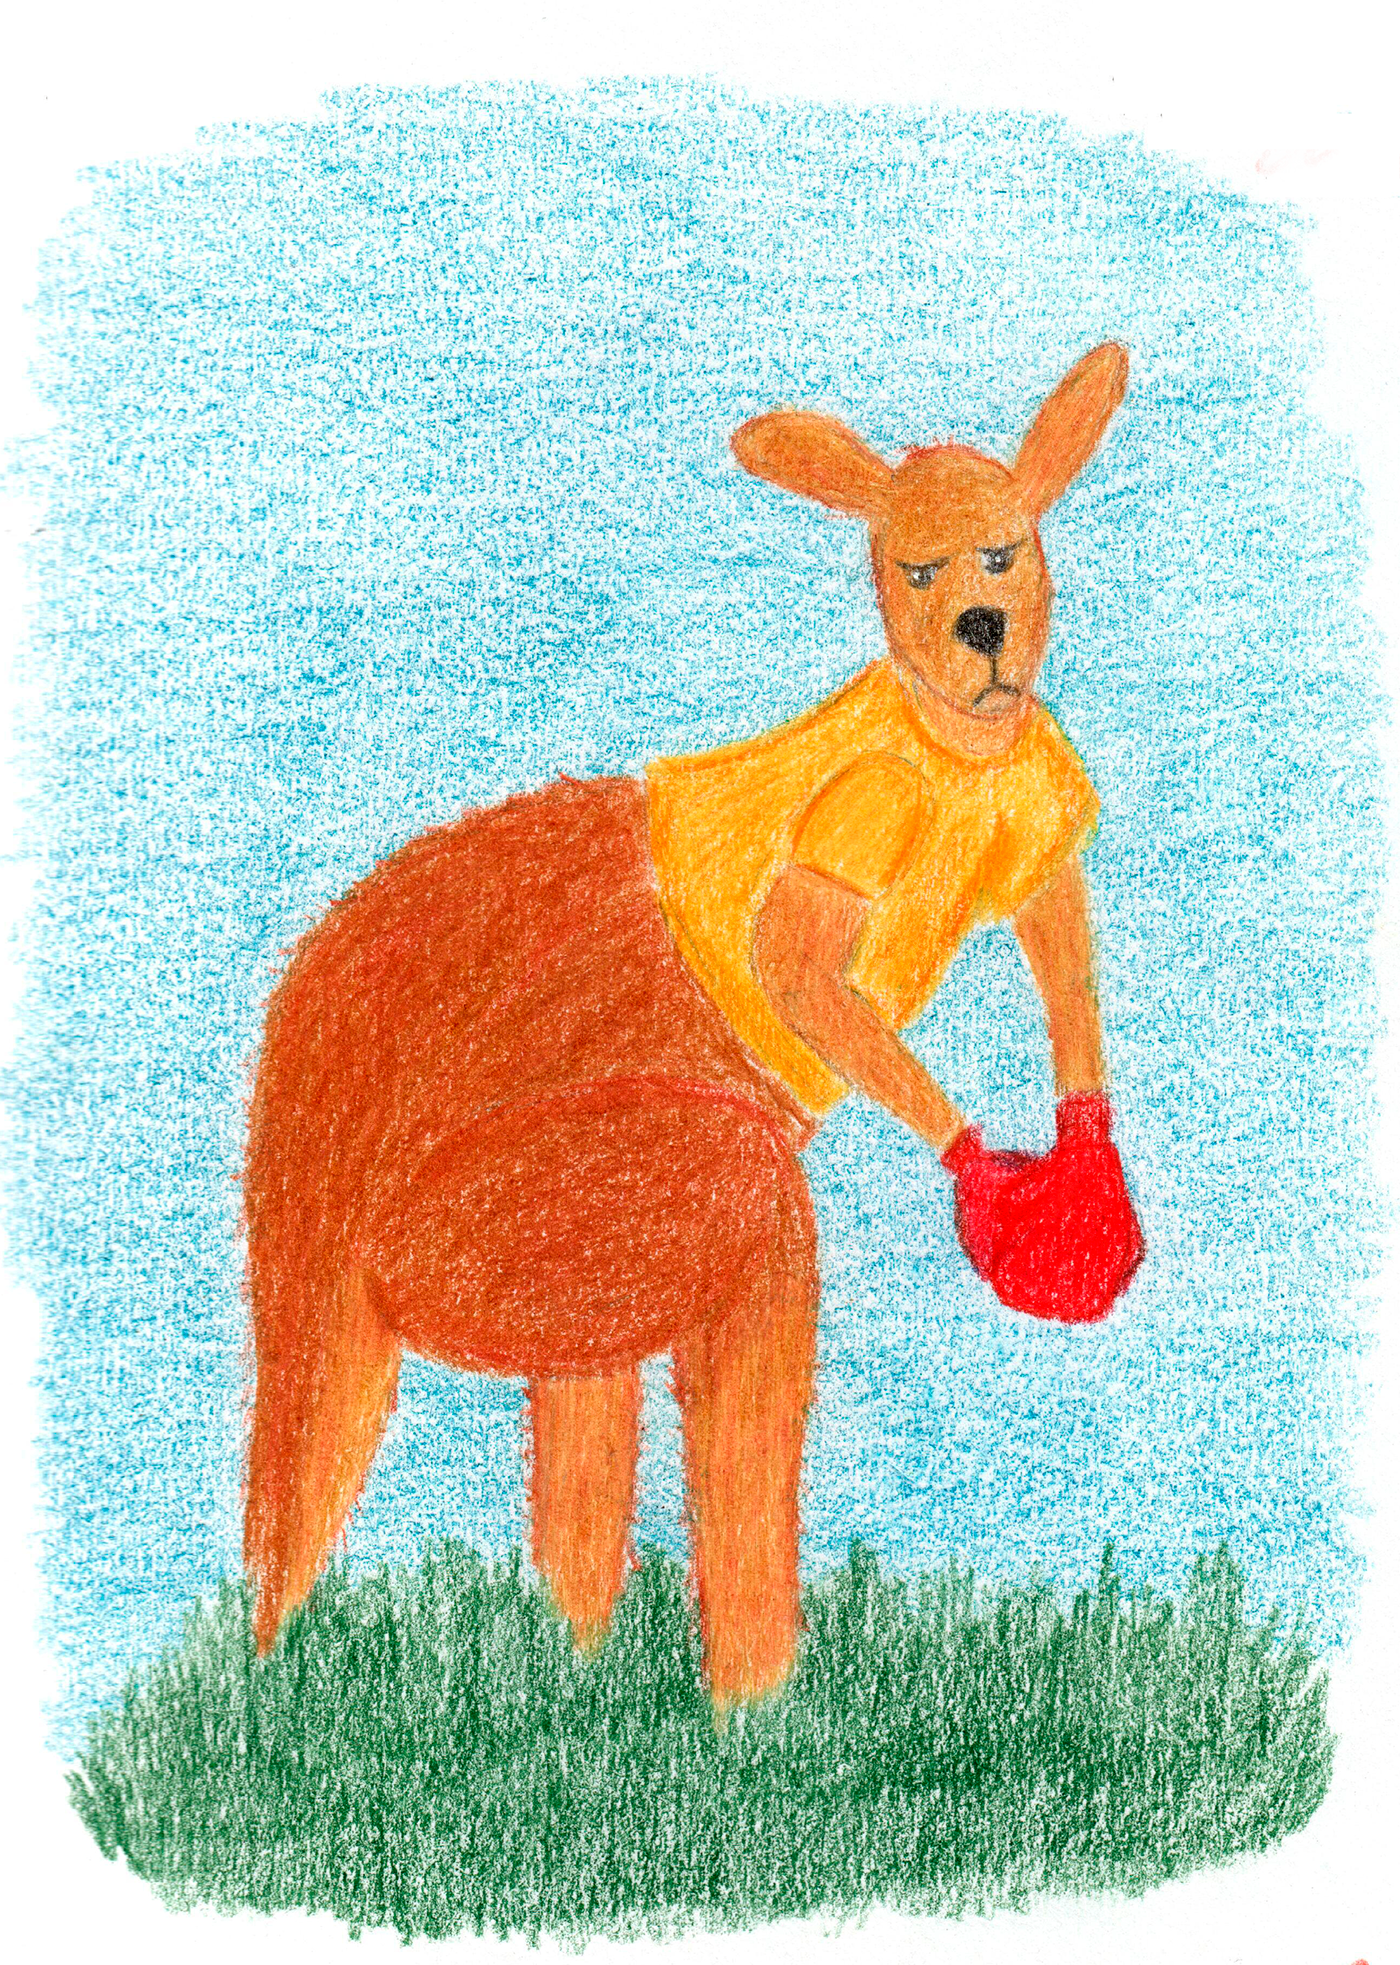 ILLUSTRATION  children illustration funny animals aquamarkers Color Pencils